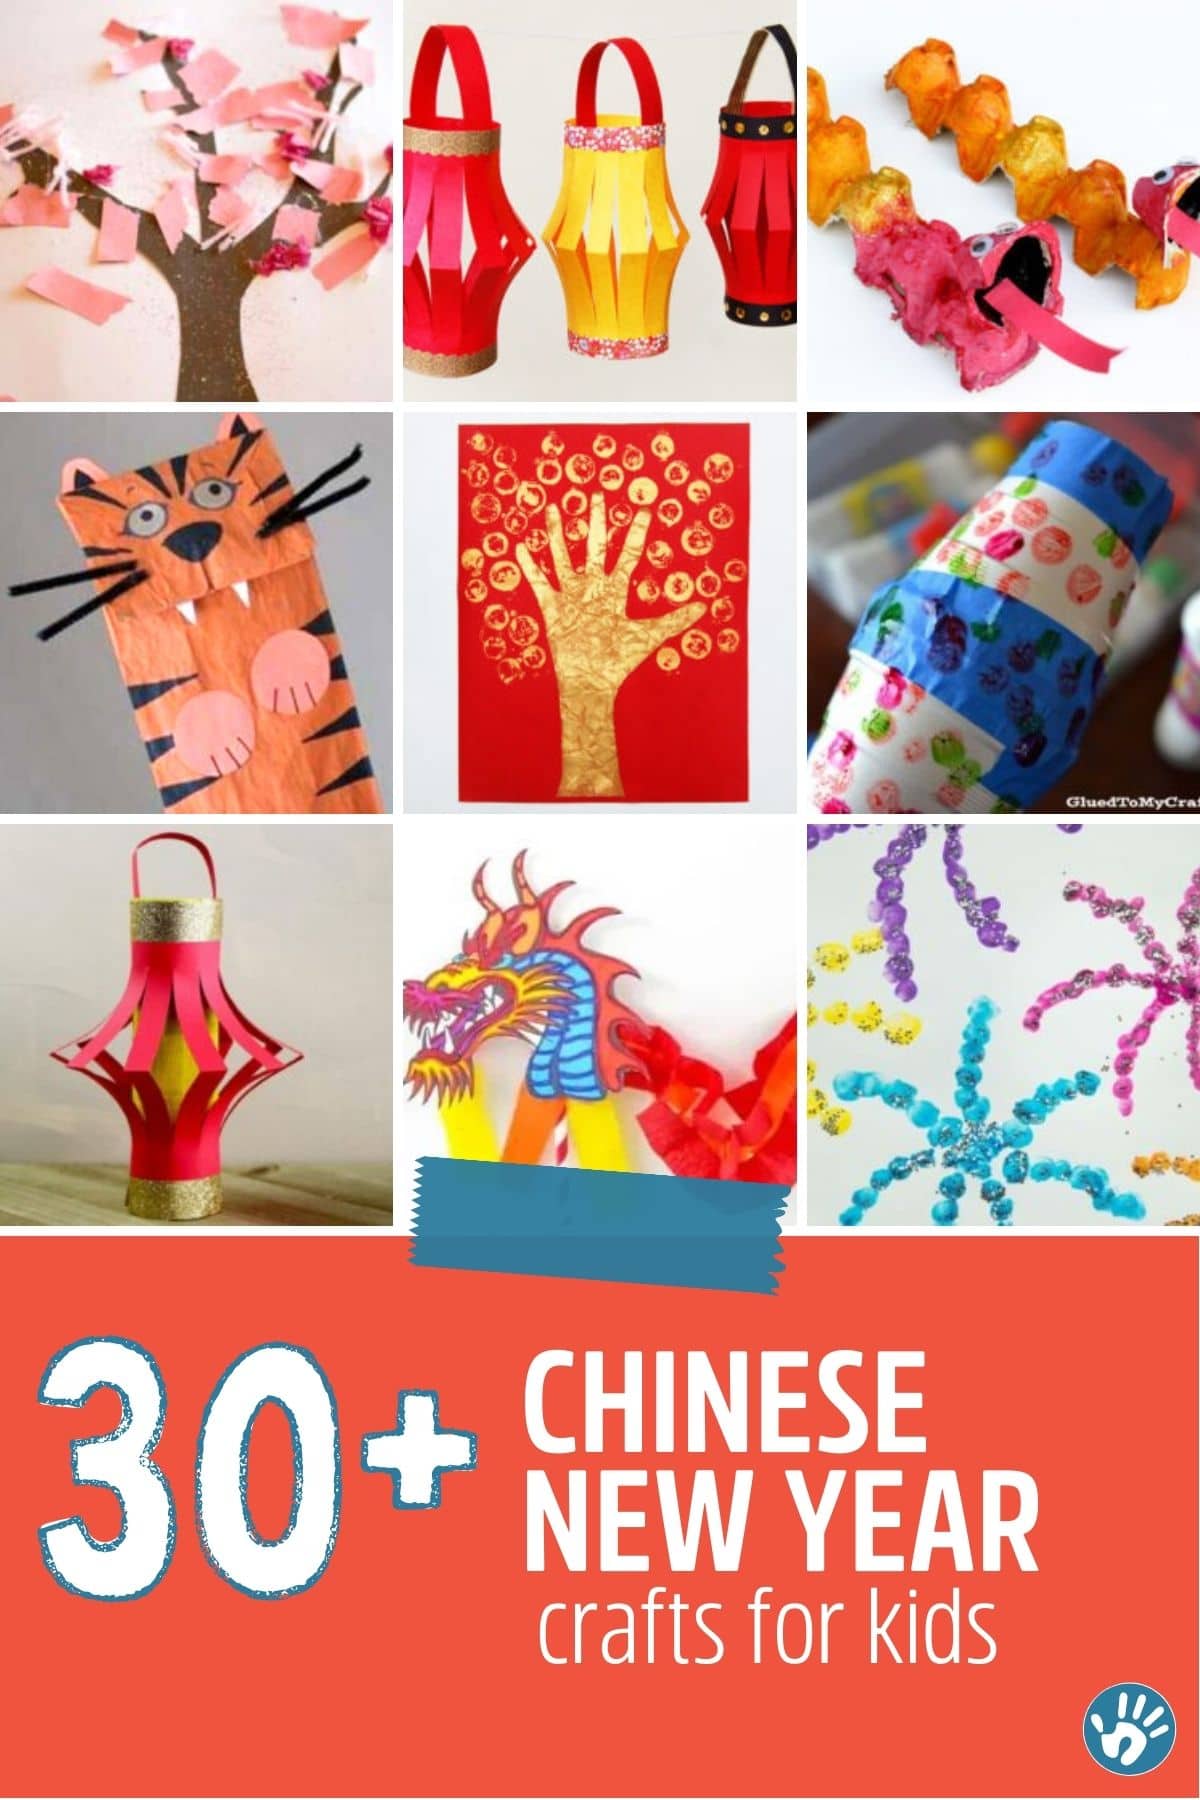 https://handsonaswegrow.com/wp-content/uploads/2022/01/30_chinese_new_year_crafts_1200x1800_feature.jpg